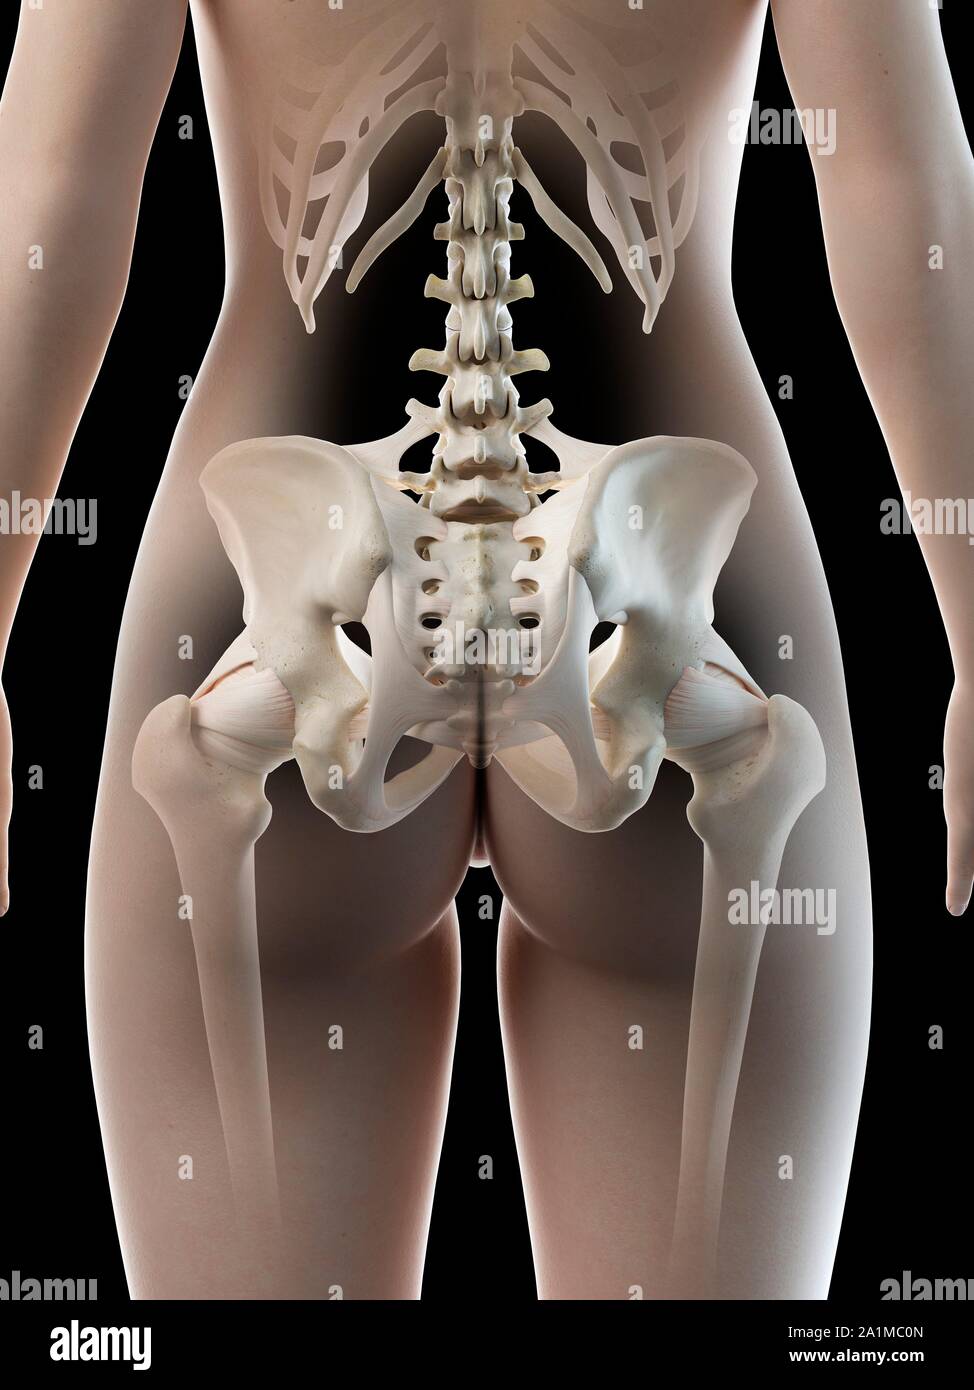 girl hip bones